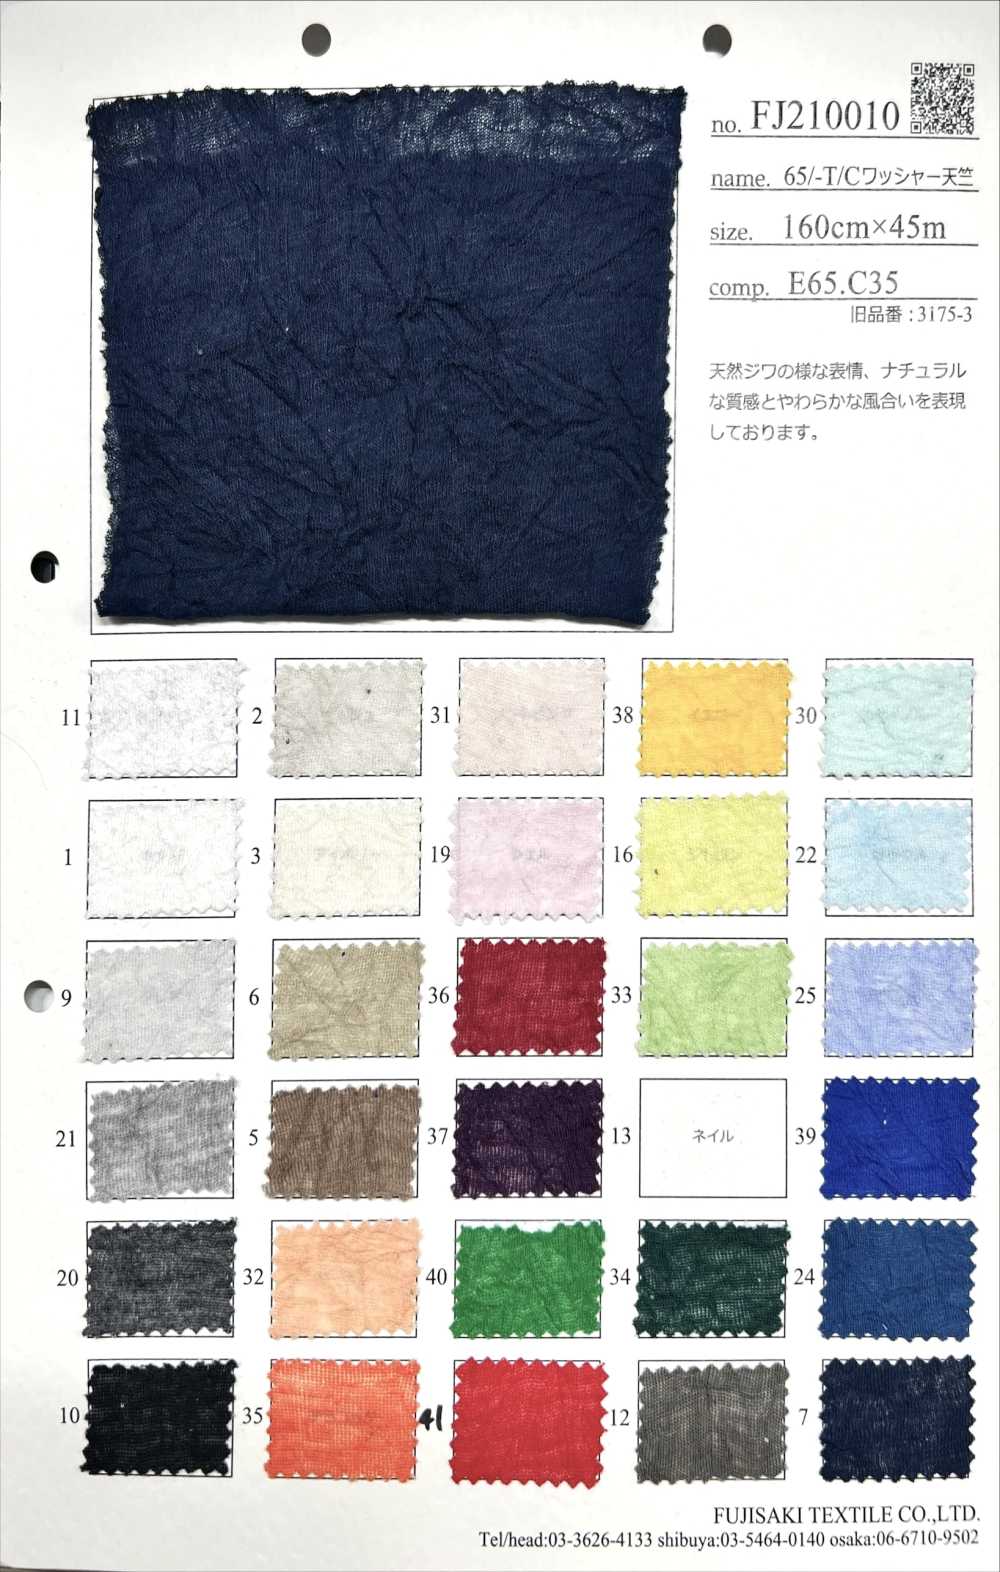 FJ210010 Vải Cotton Tenjiku được Xử Lý Bằng Máy Giặt 65/-T/C Fujisaki Textile